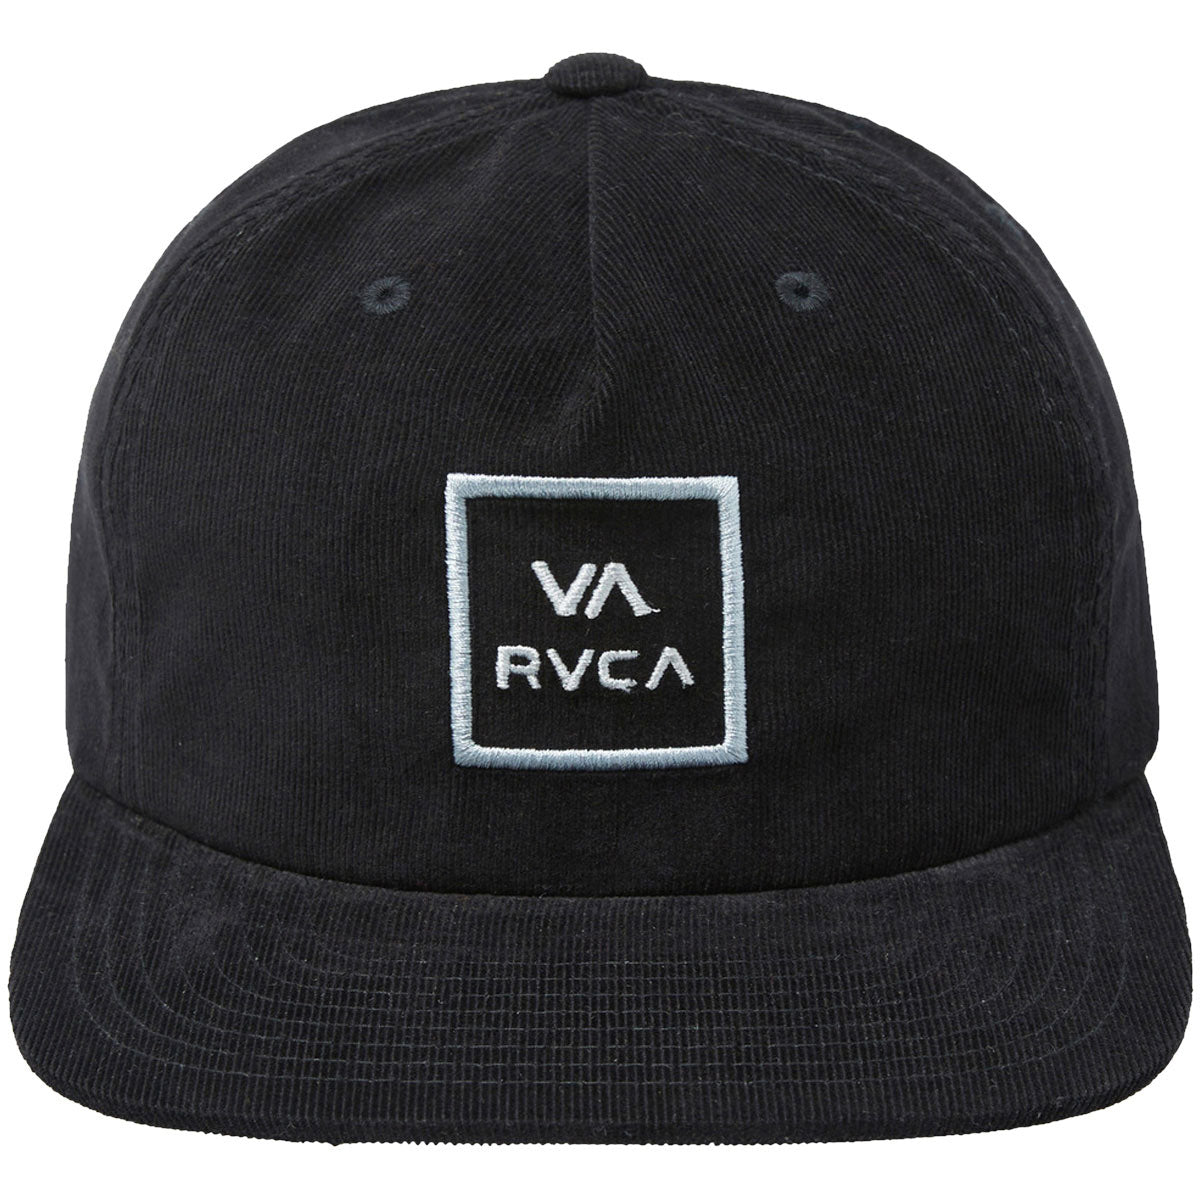 RVCA Freeman Snapback Hat - Black image 3